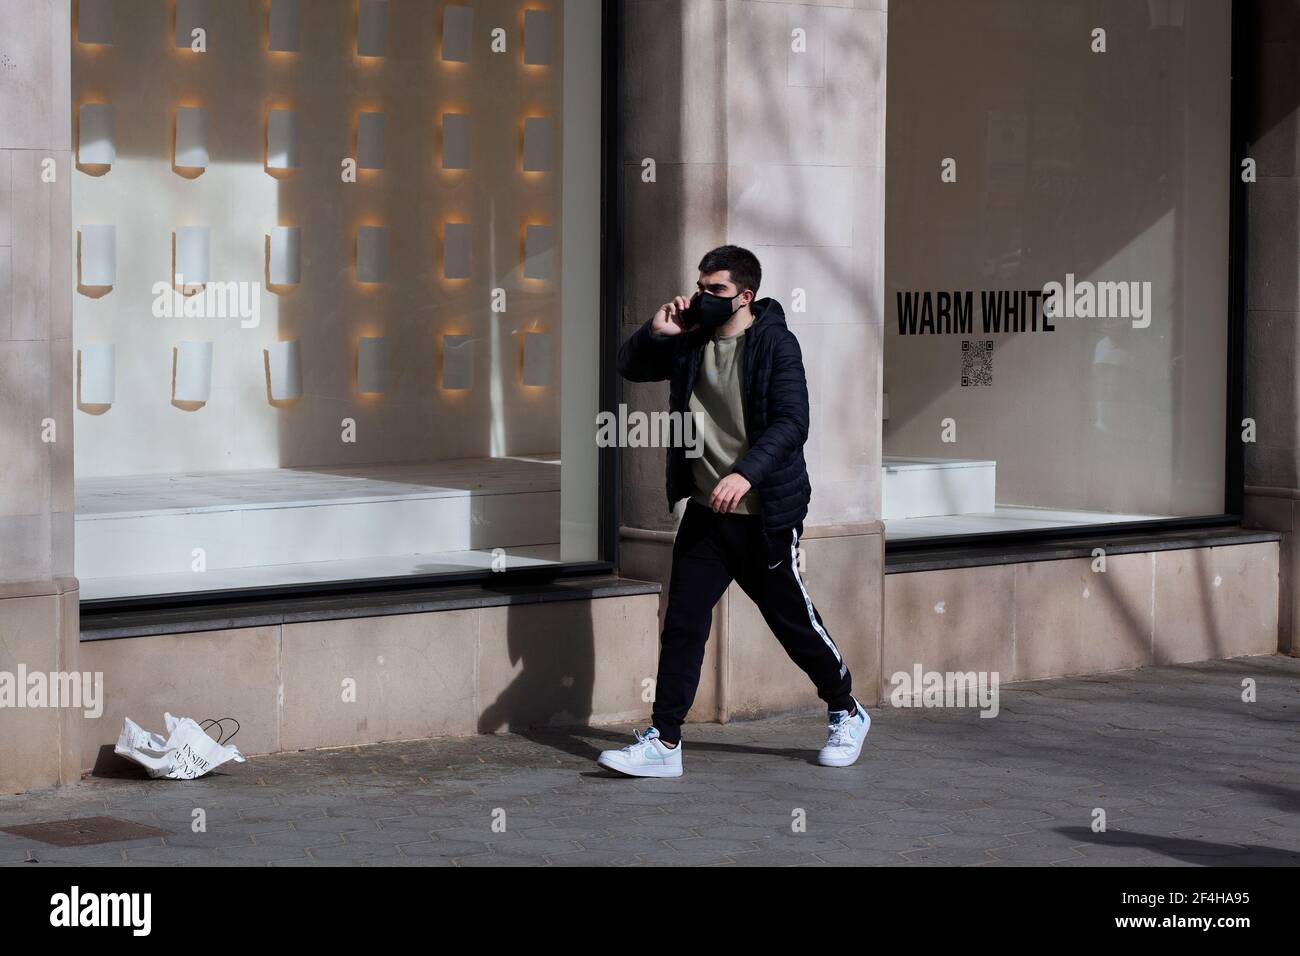 Man on phone walking past Zara window display, Barcelona, Spain. Stock Photo